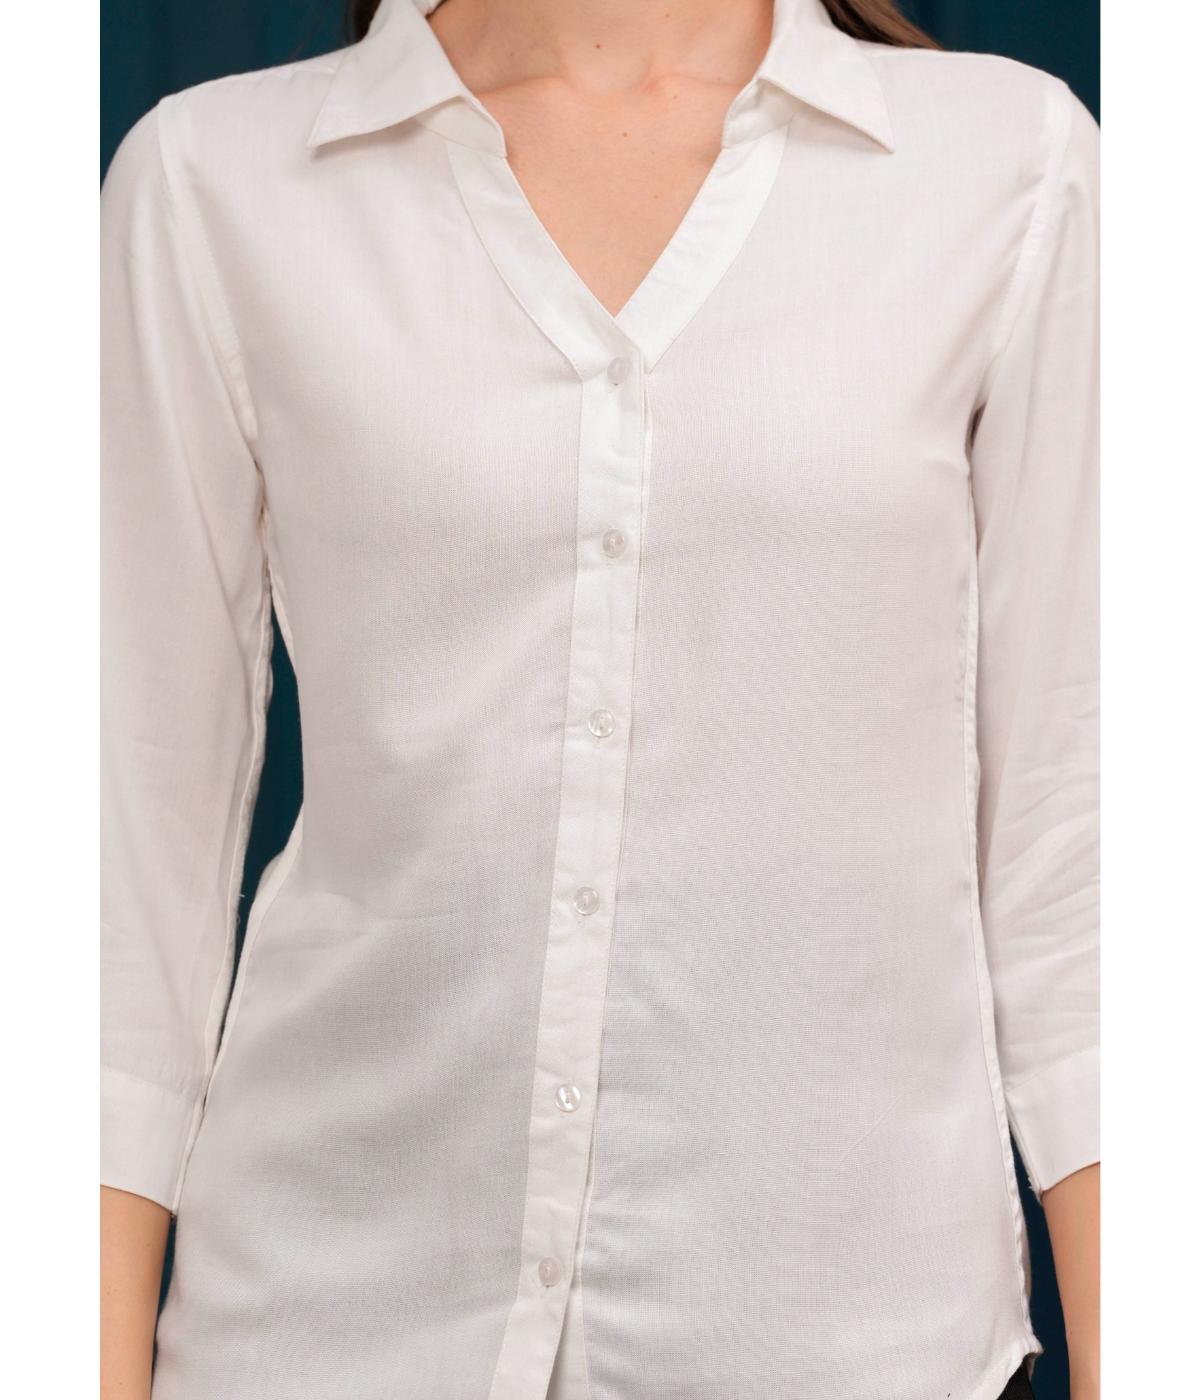 Daevish New Casual 3/4 Sleeves V Nack Shirt for Women & Girl's